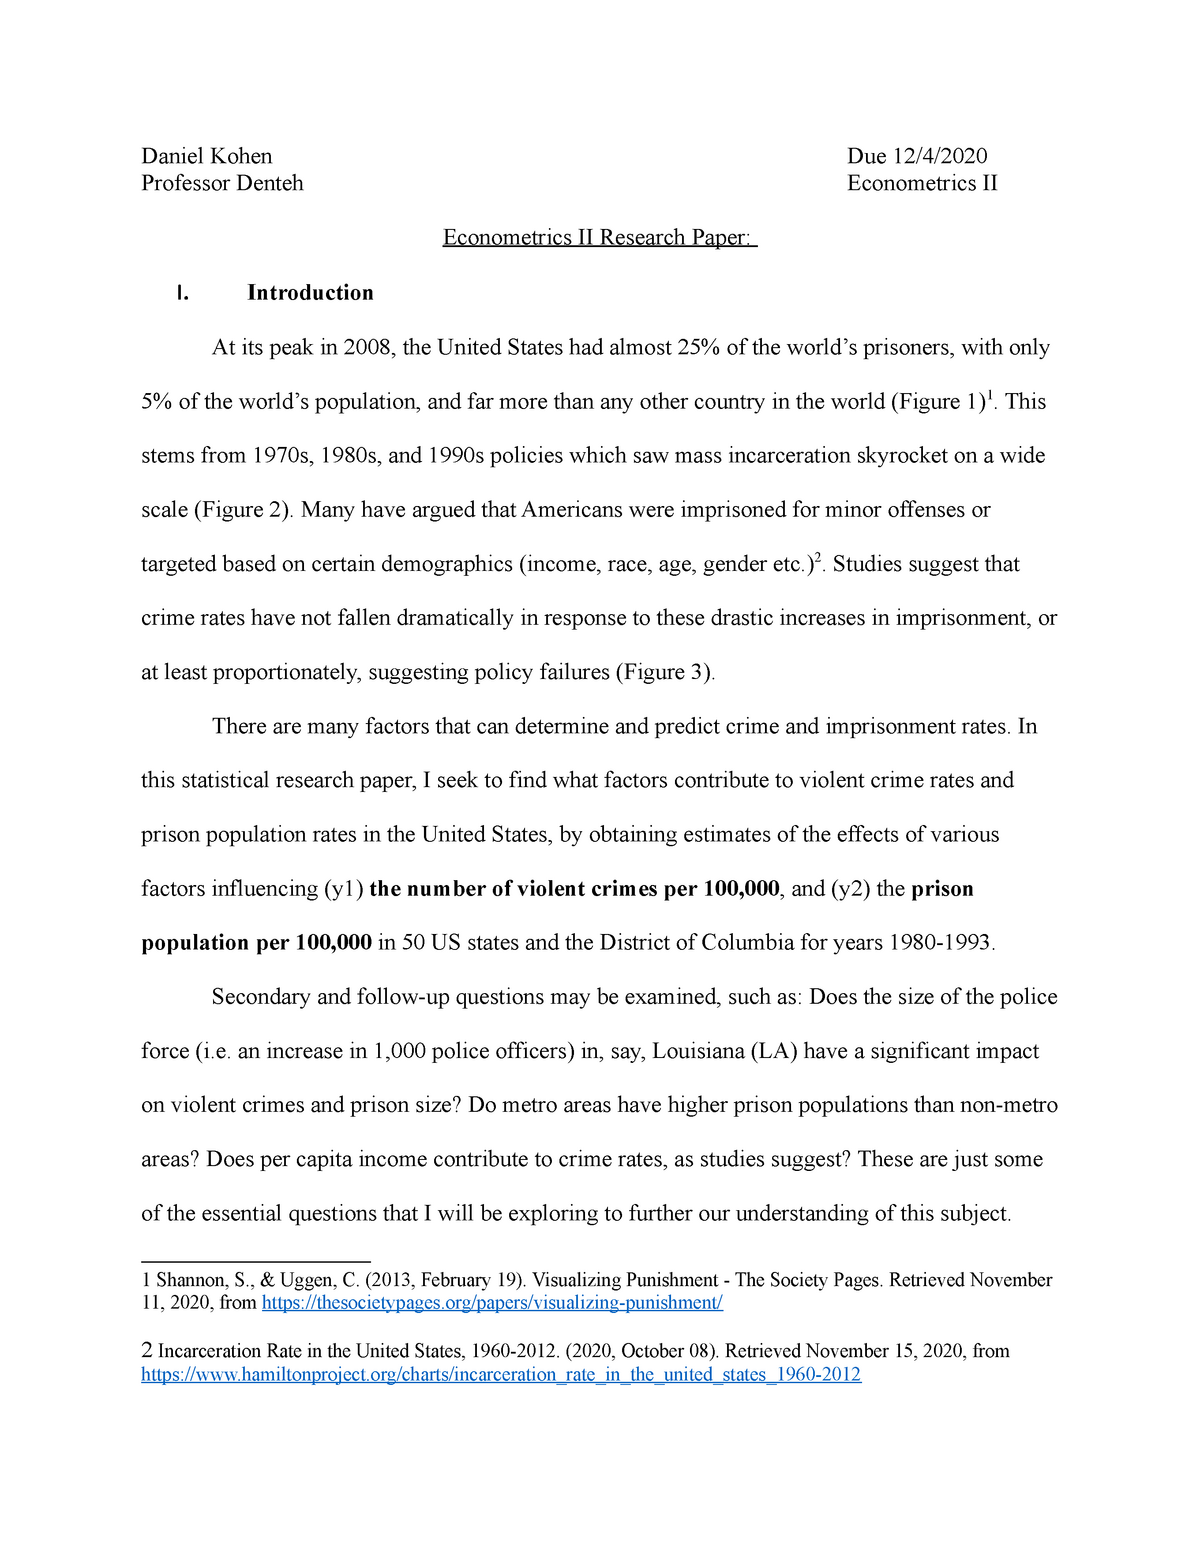 econometrics research paper